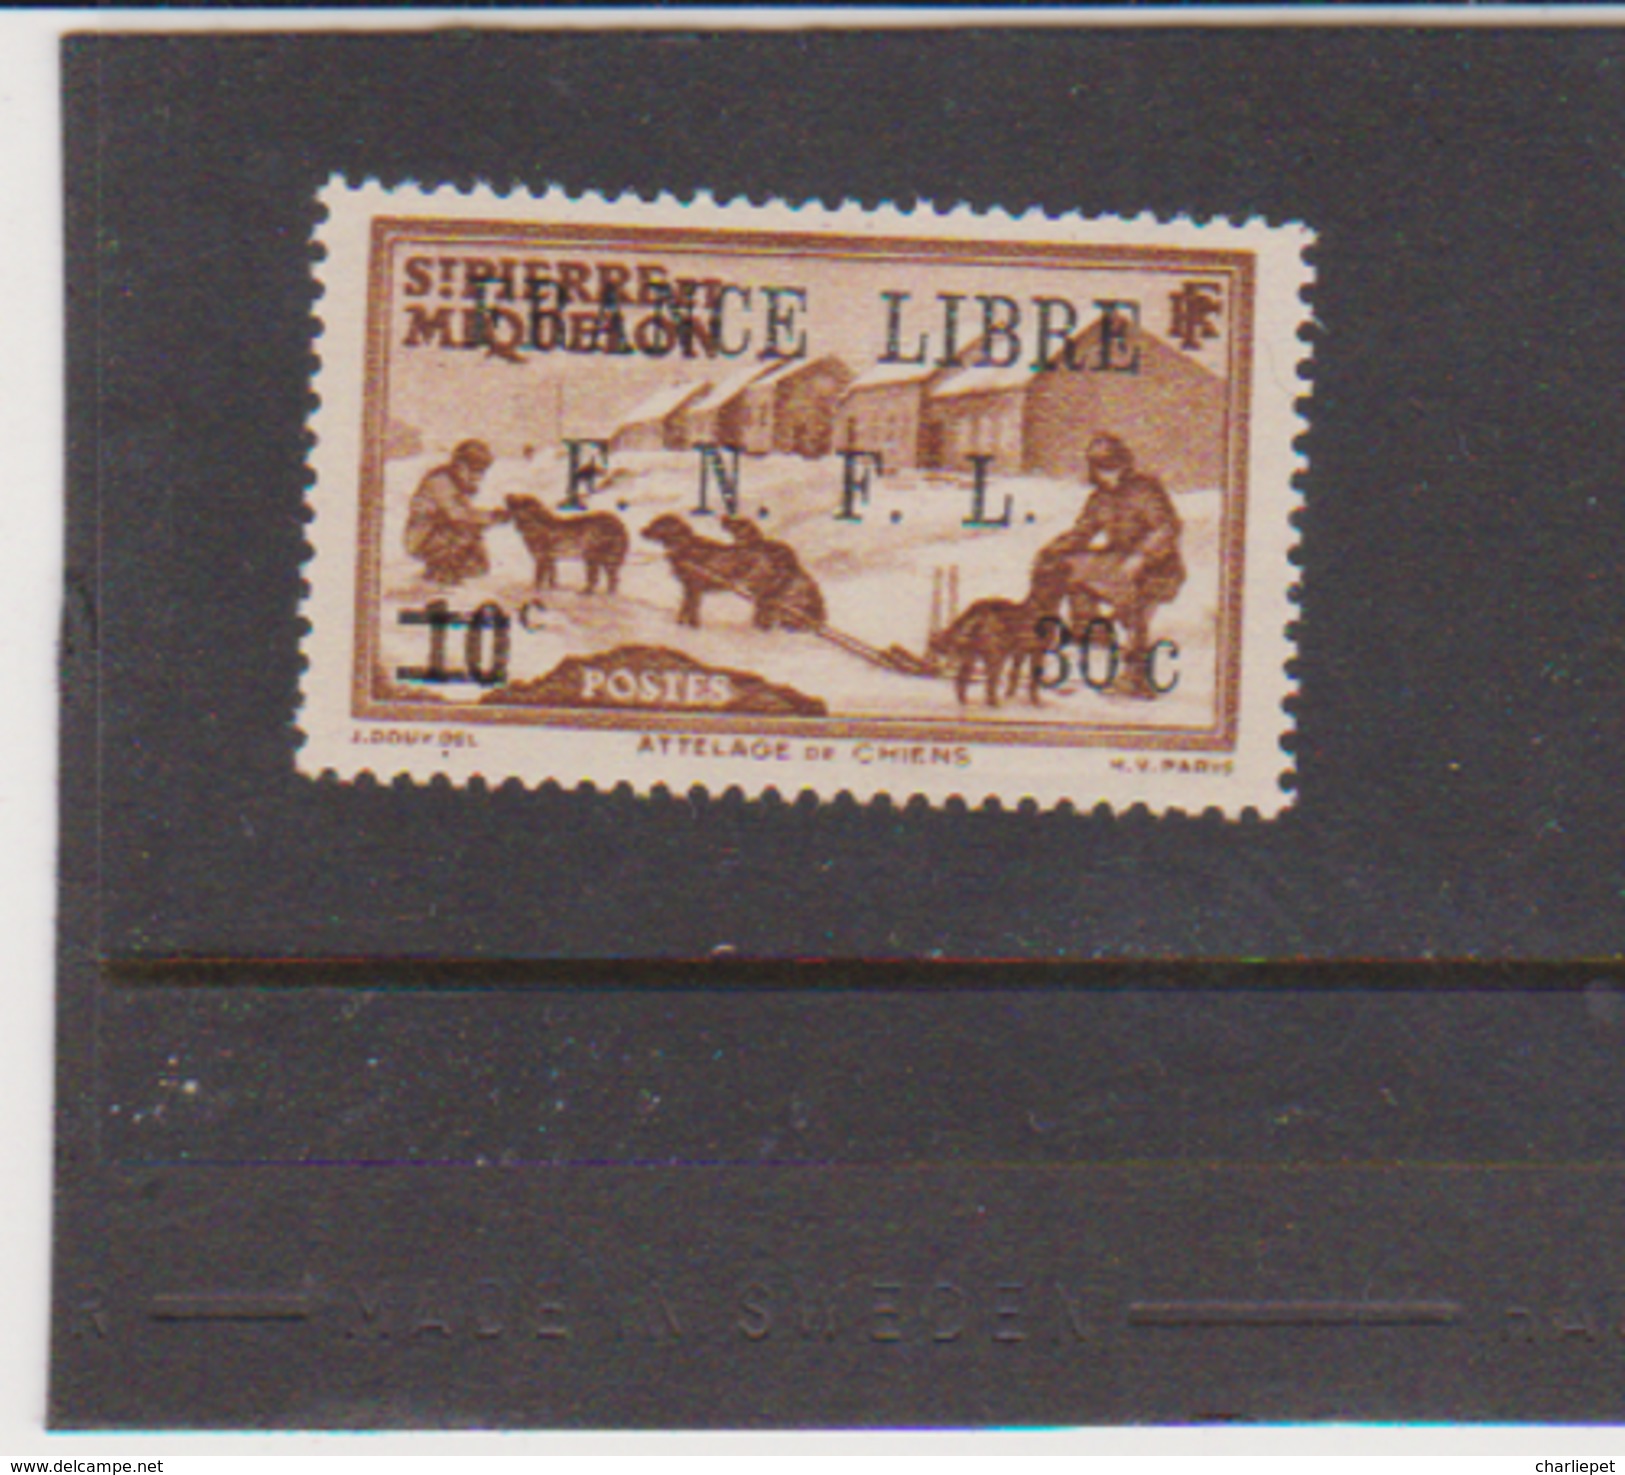 St Pierre & Miquelon Scott # 250 MH Dog Team Overprinted FRANCE LIBRE F. N. F. L. Catalogue $12.50 - Unused Stamps